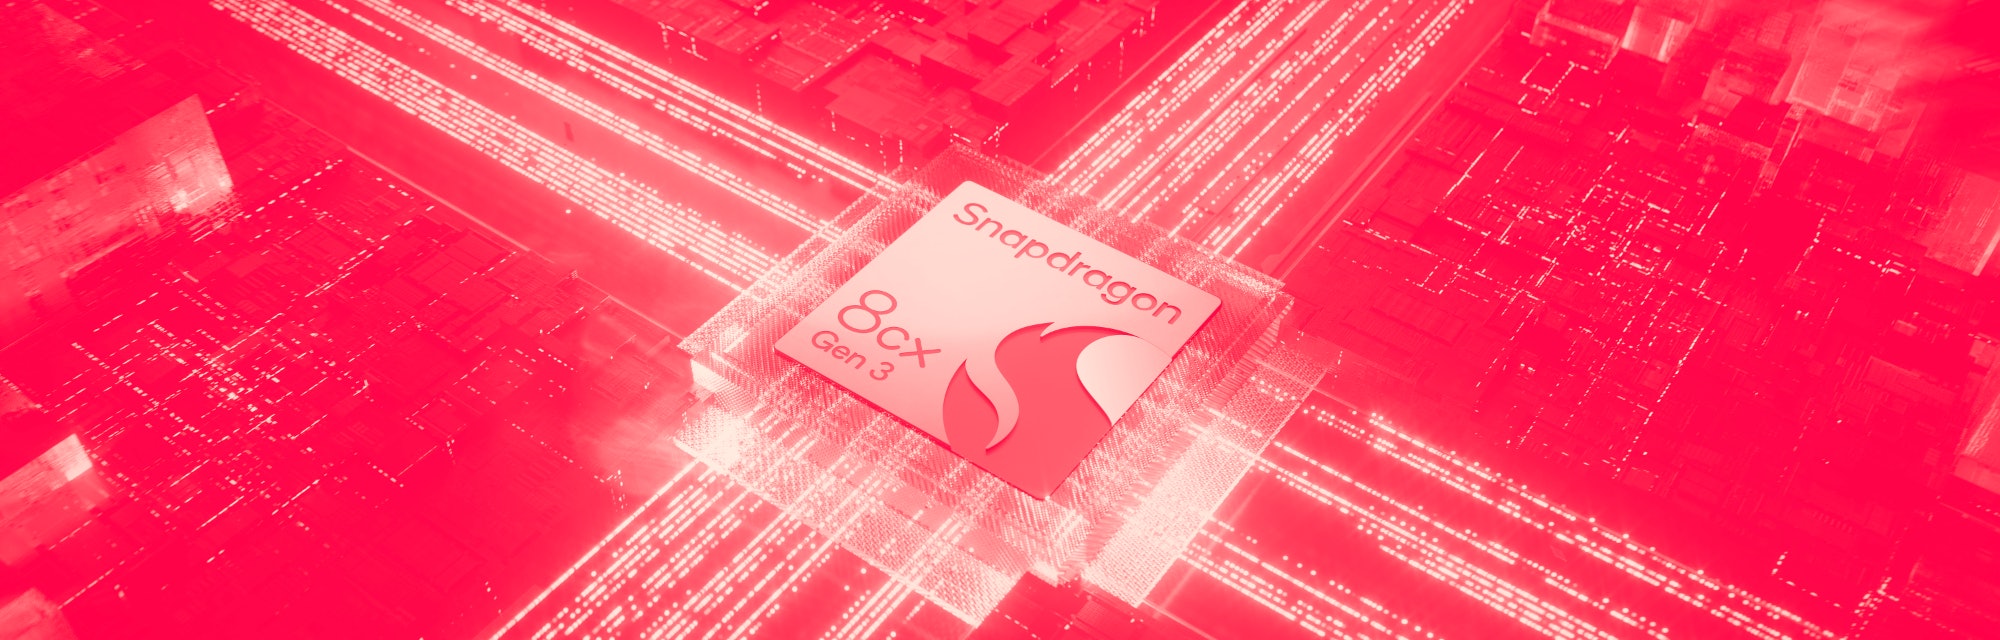 Qualcomm Snapdragon 8cx Gen 3 chip for laptops